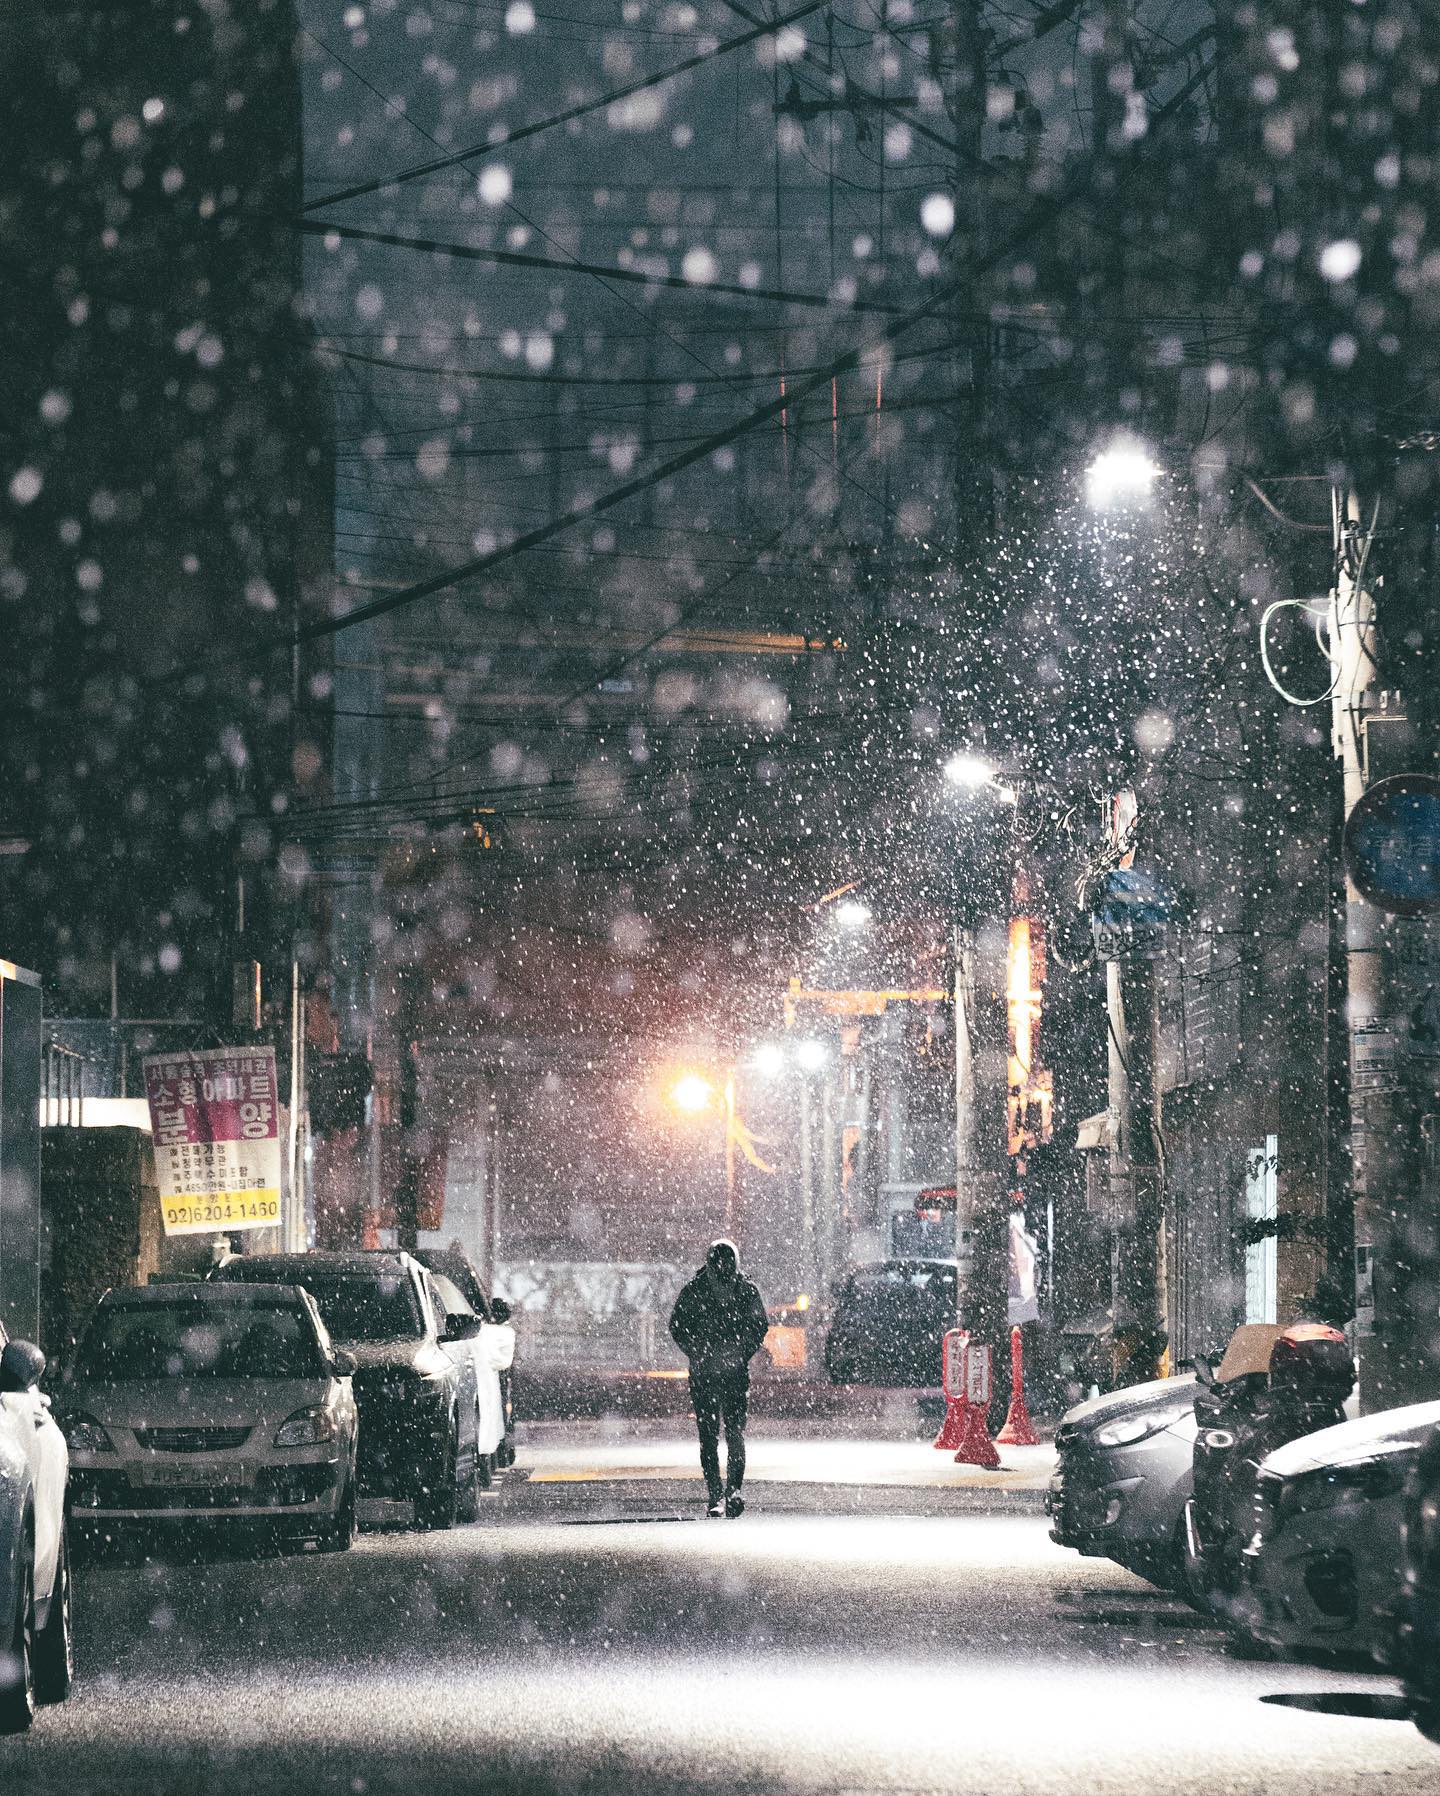 Snow over a street in Seongsu Ward, Seongdong District, Seoul [1440×1796]